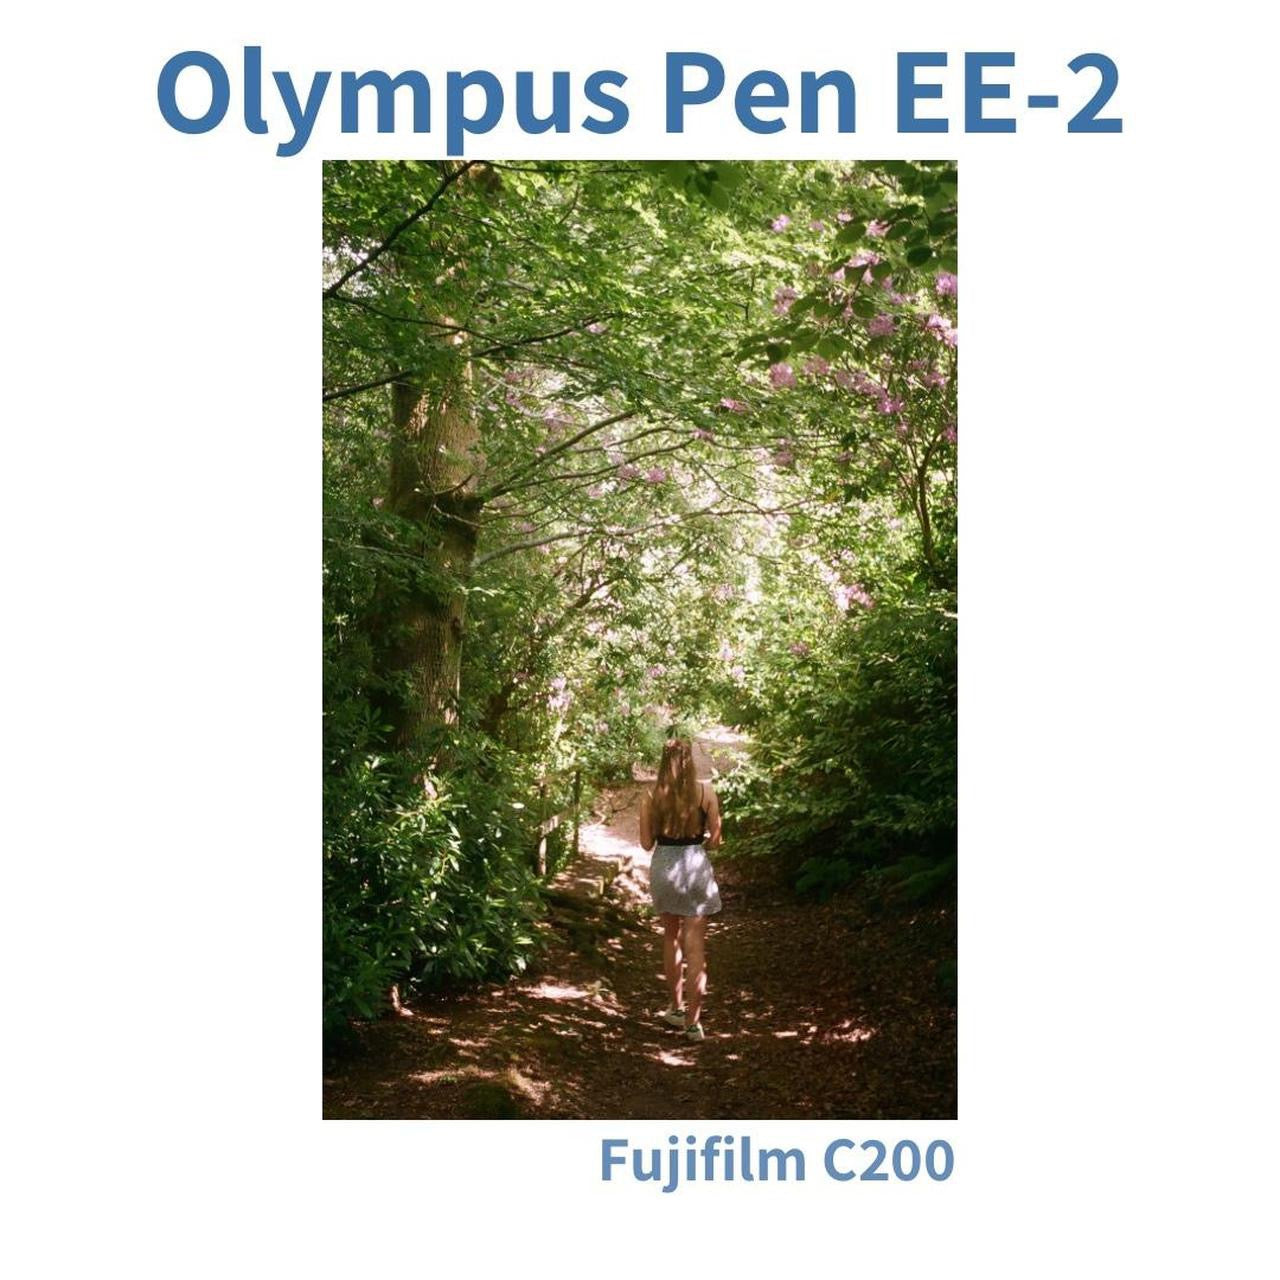 Olympus Pen EE-2 - British Racing Green